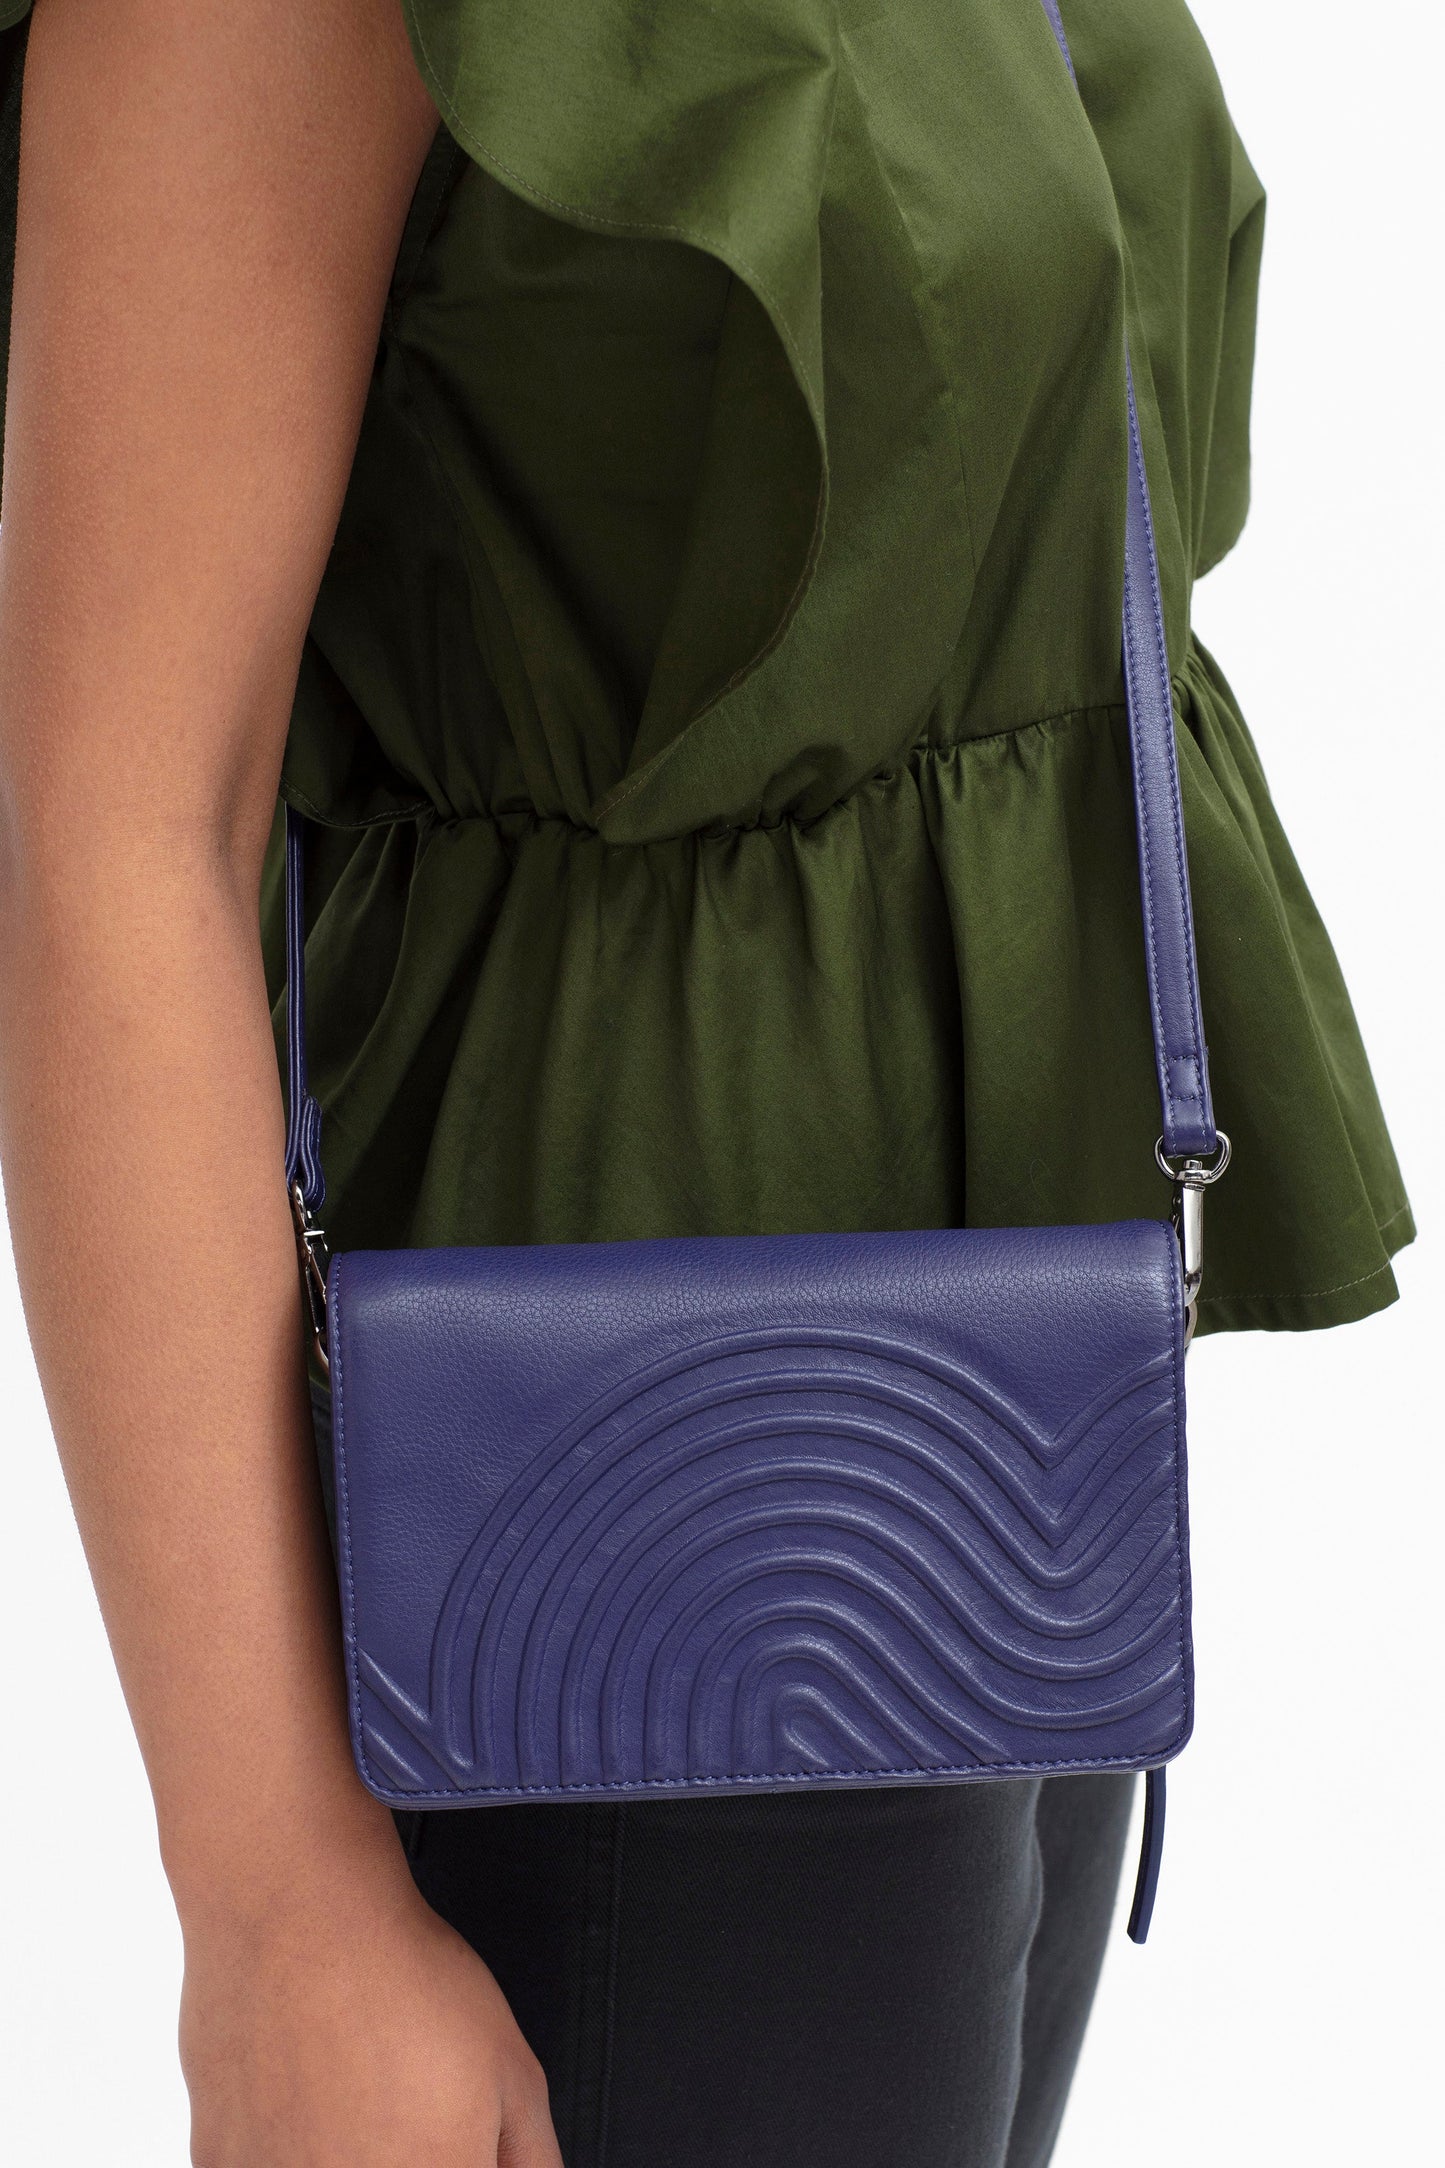 Virla Remnant Leather Patterned Texture Crossbody Hand Bag Model Detail ROYAL BLUE